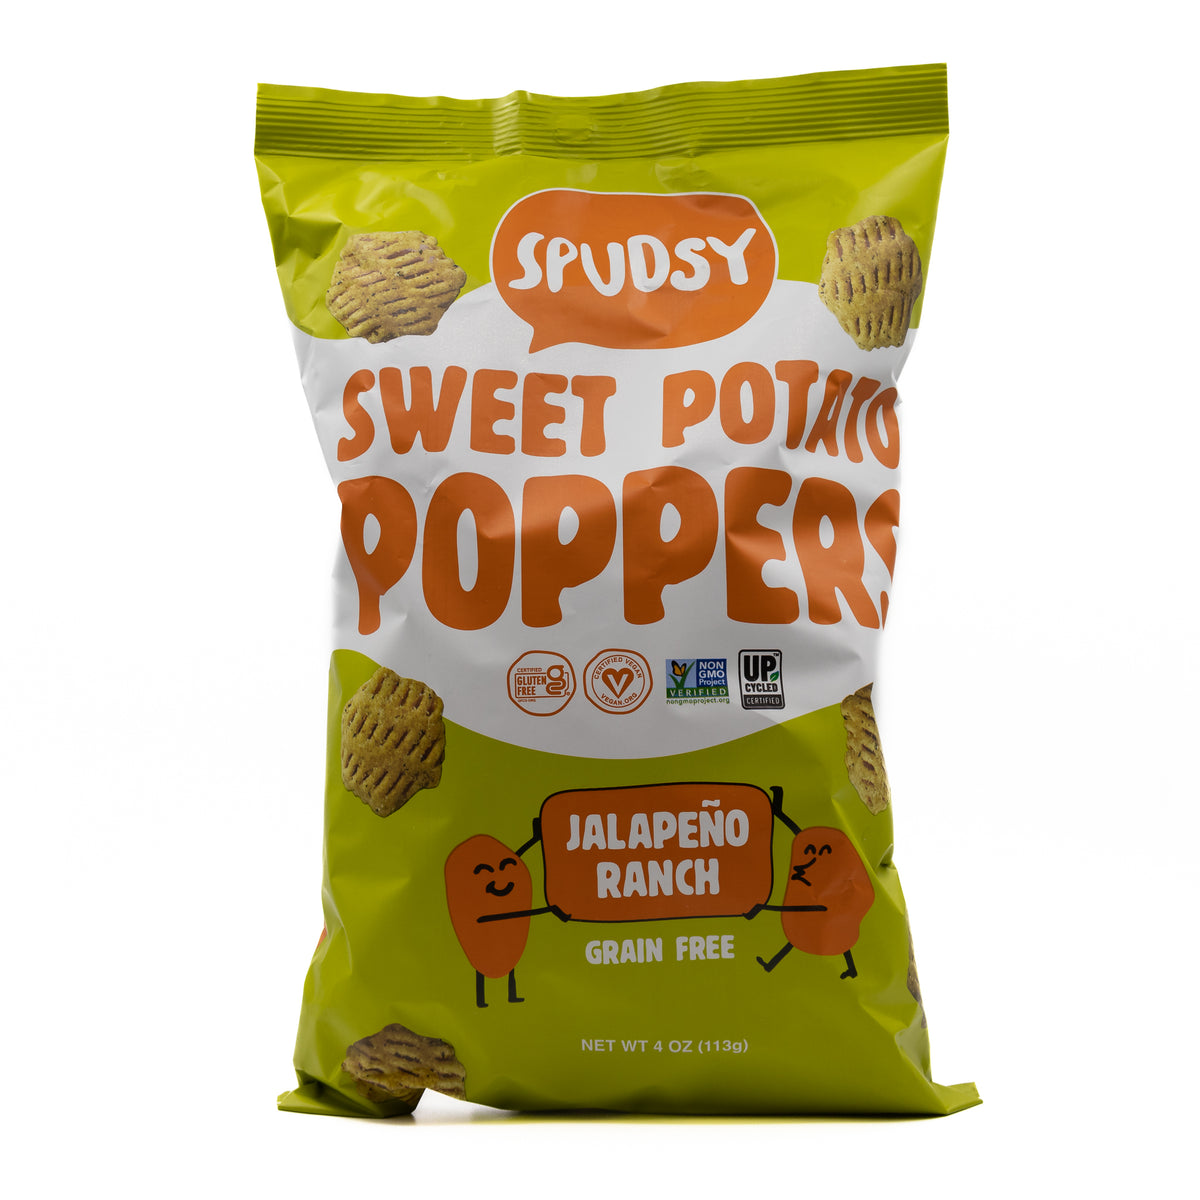 Spudsy Sweet Potato Poppers Jalapeno Ranch